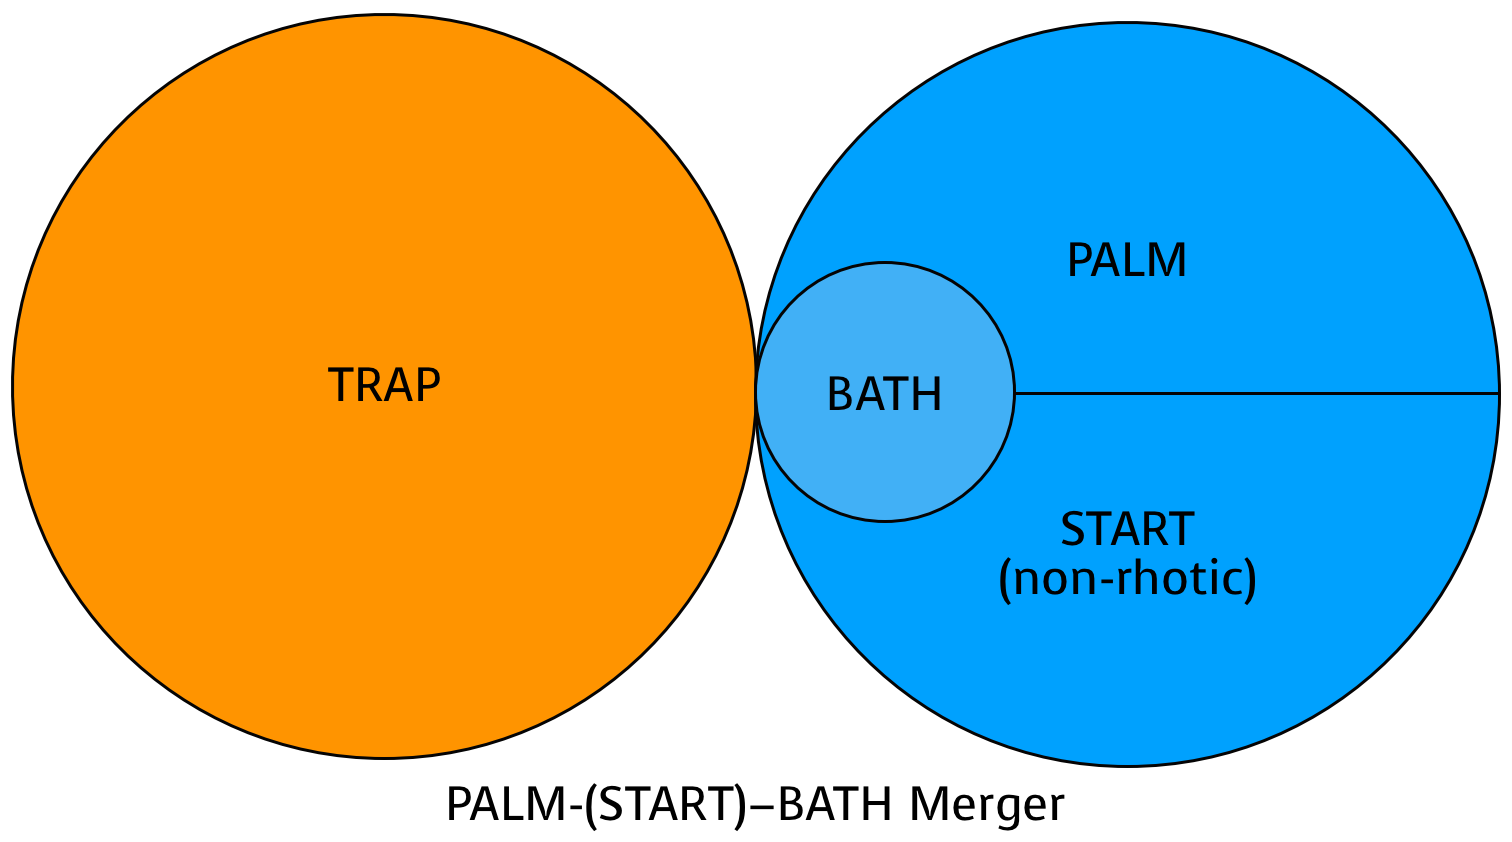 PALM-START-BATH Merger